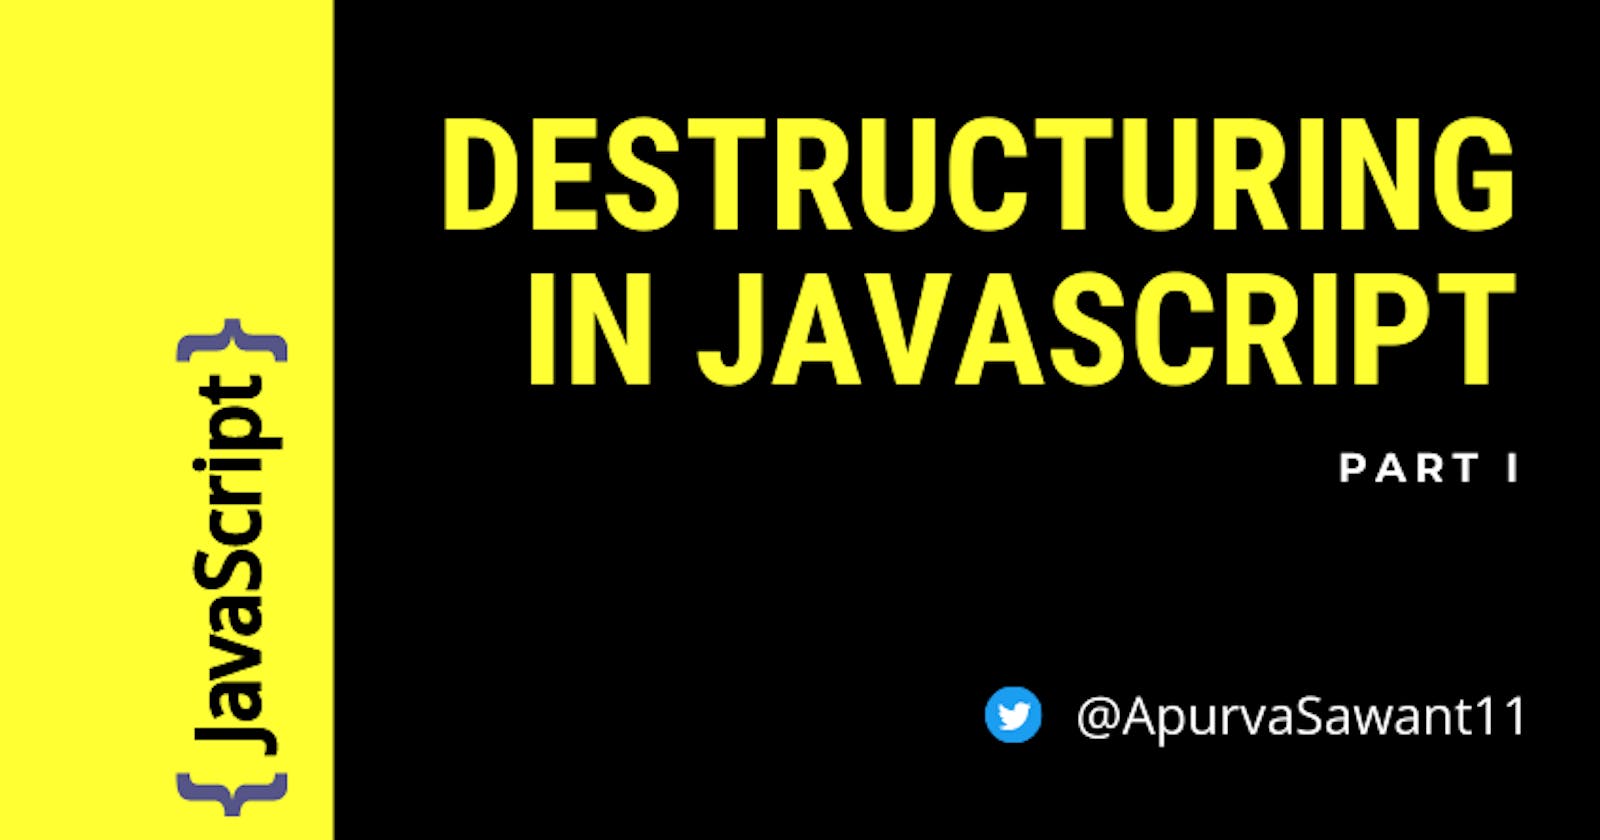 Destructuring in JavaScript - Part I